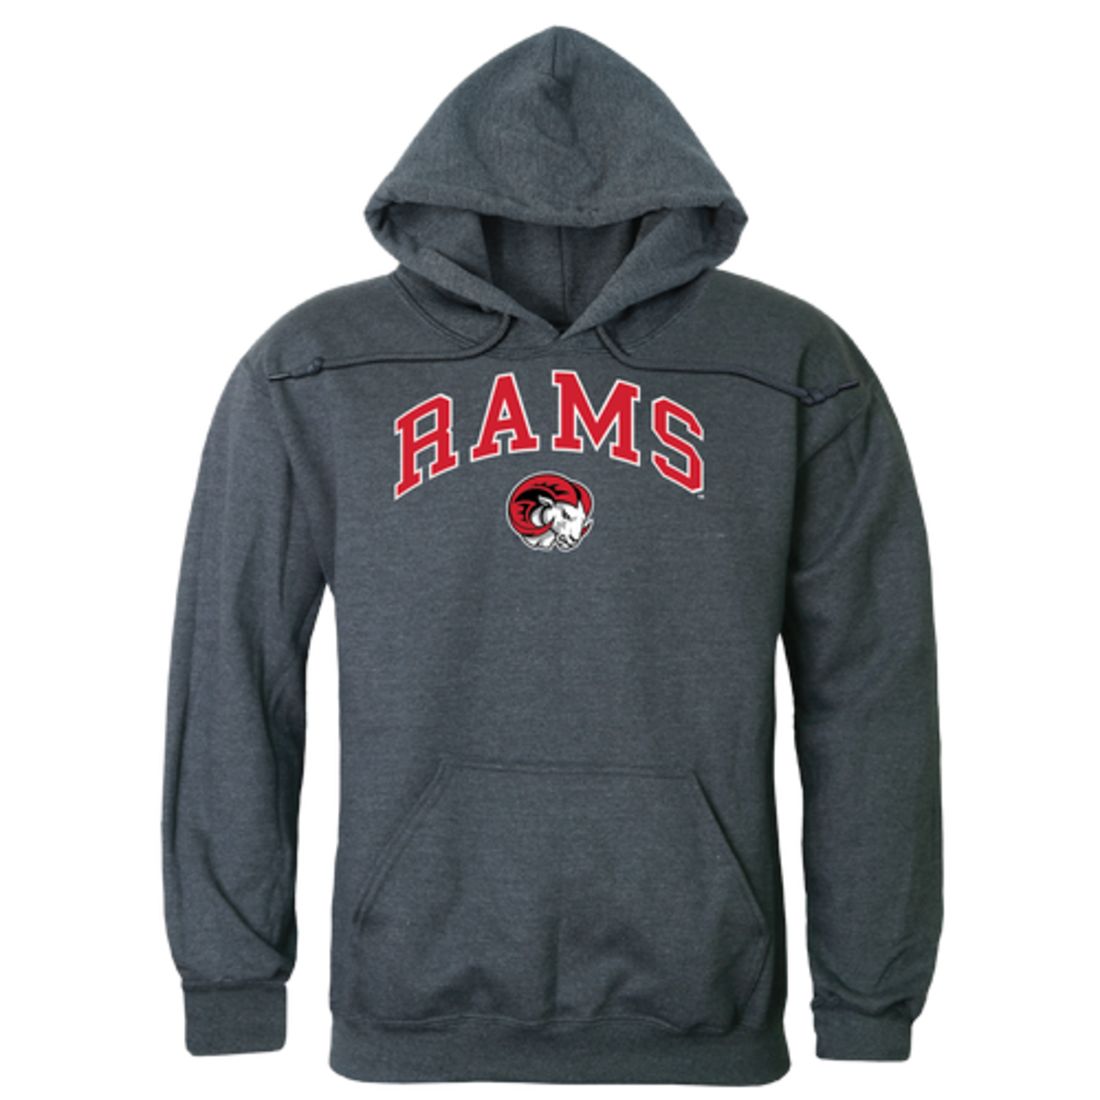 Winston-Salem State University Rams Campus Fleece Hoodie Sweatshirts